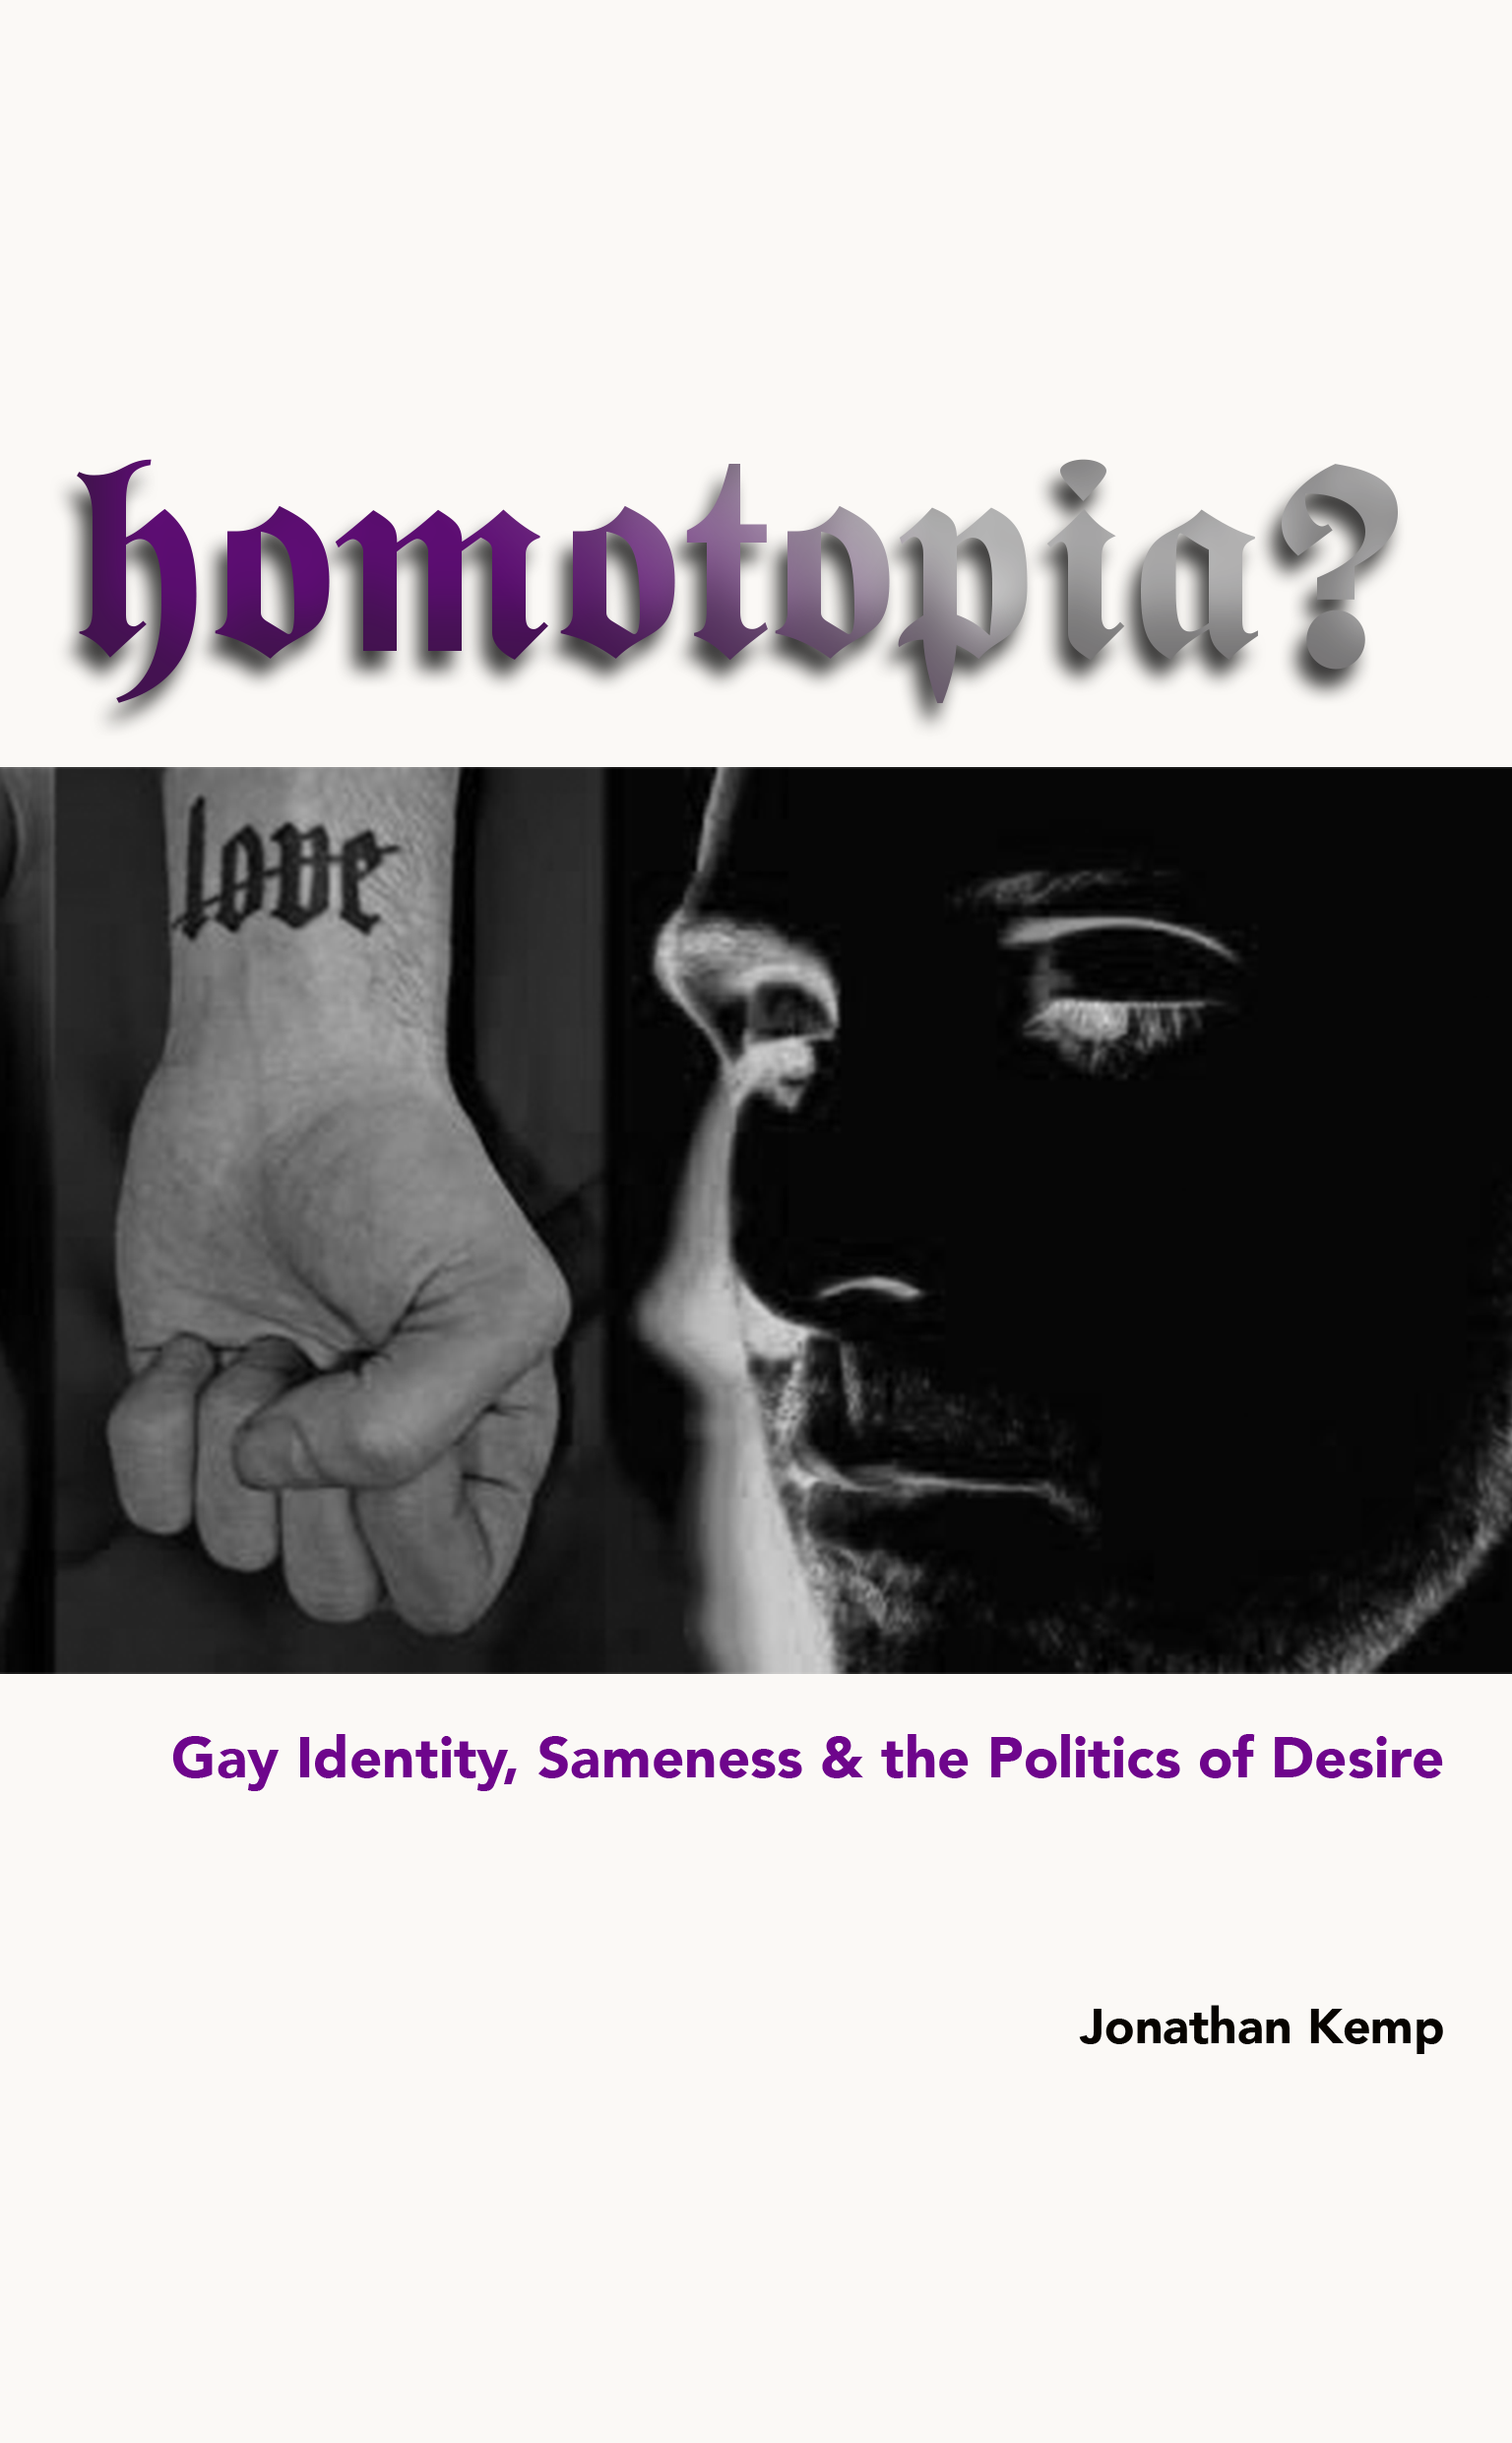 Homotopia? Gay Identity, Sameness & the Politics of Desire (punctum books, 2015)